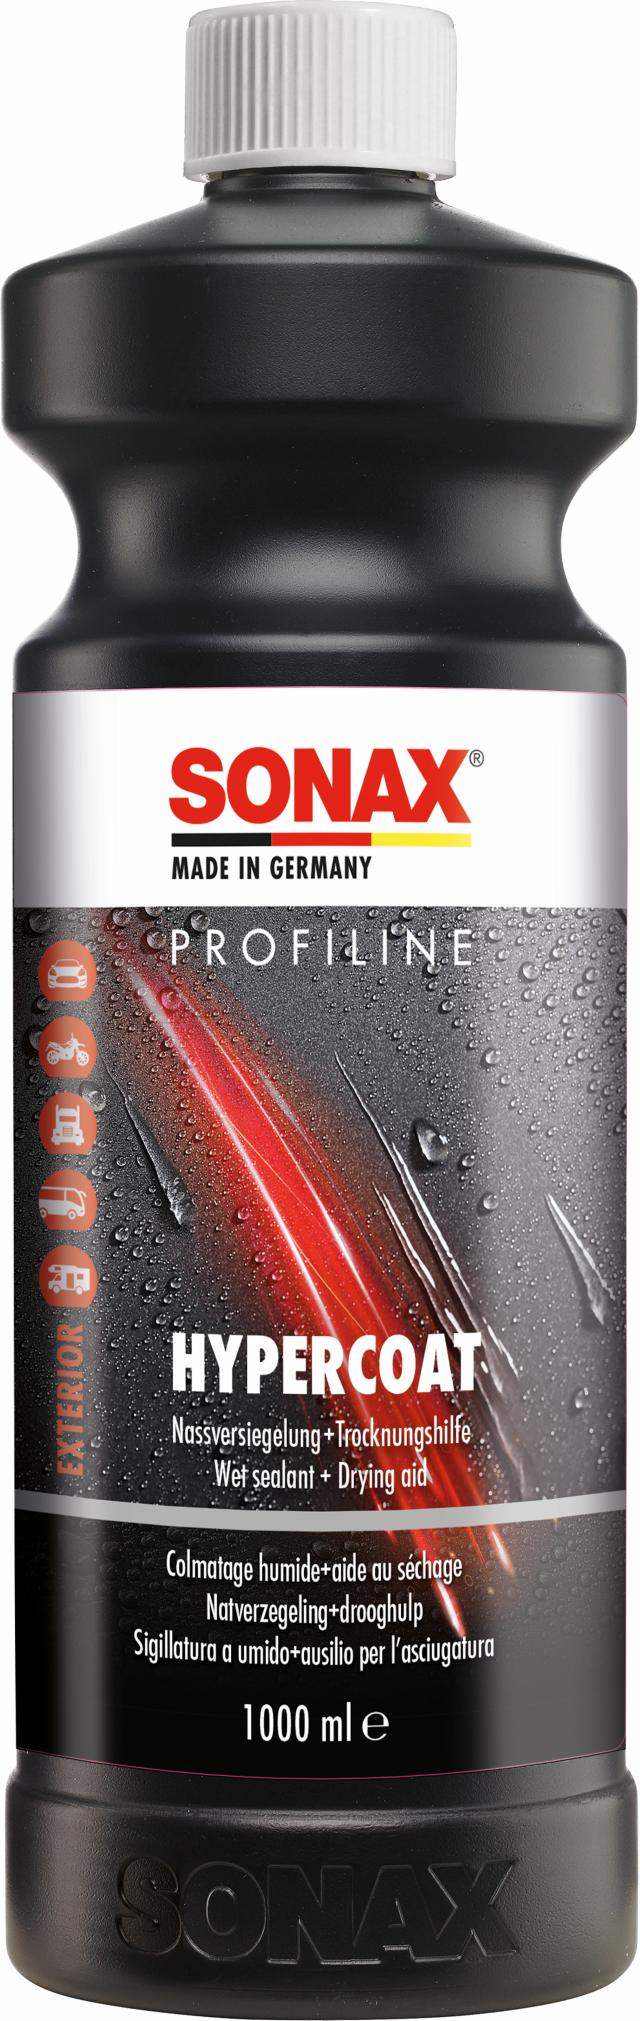 SONAX PROFILINE Hypercoat 1L